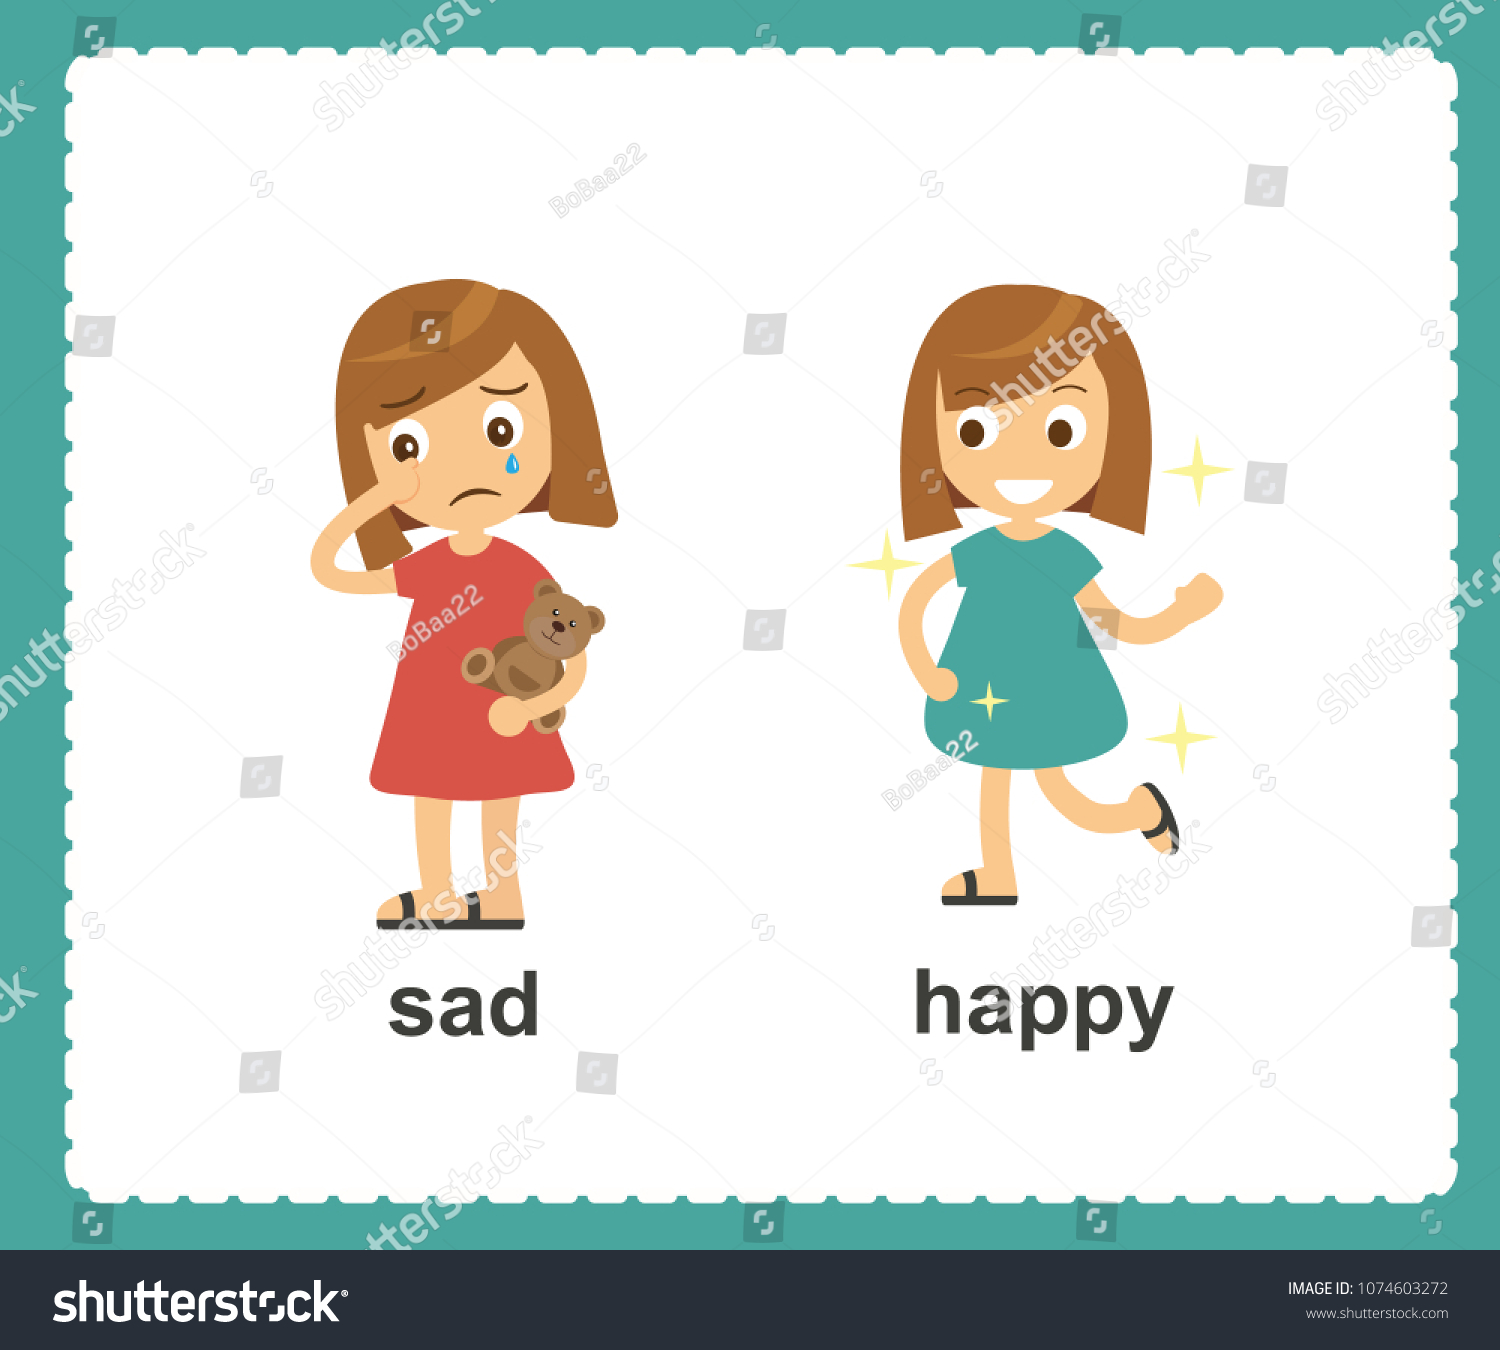 Am beautiful ugly. Карточки Sad Happy для детей. Happy Sad картинка для детей. Opposites для детей. Sad good Happy карточки.